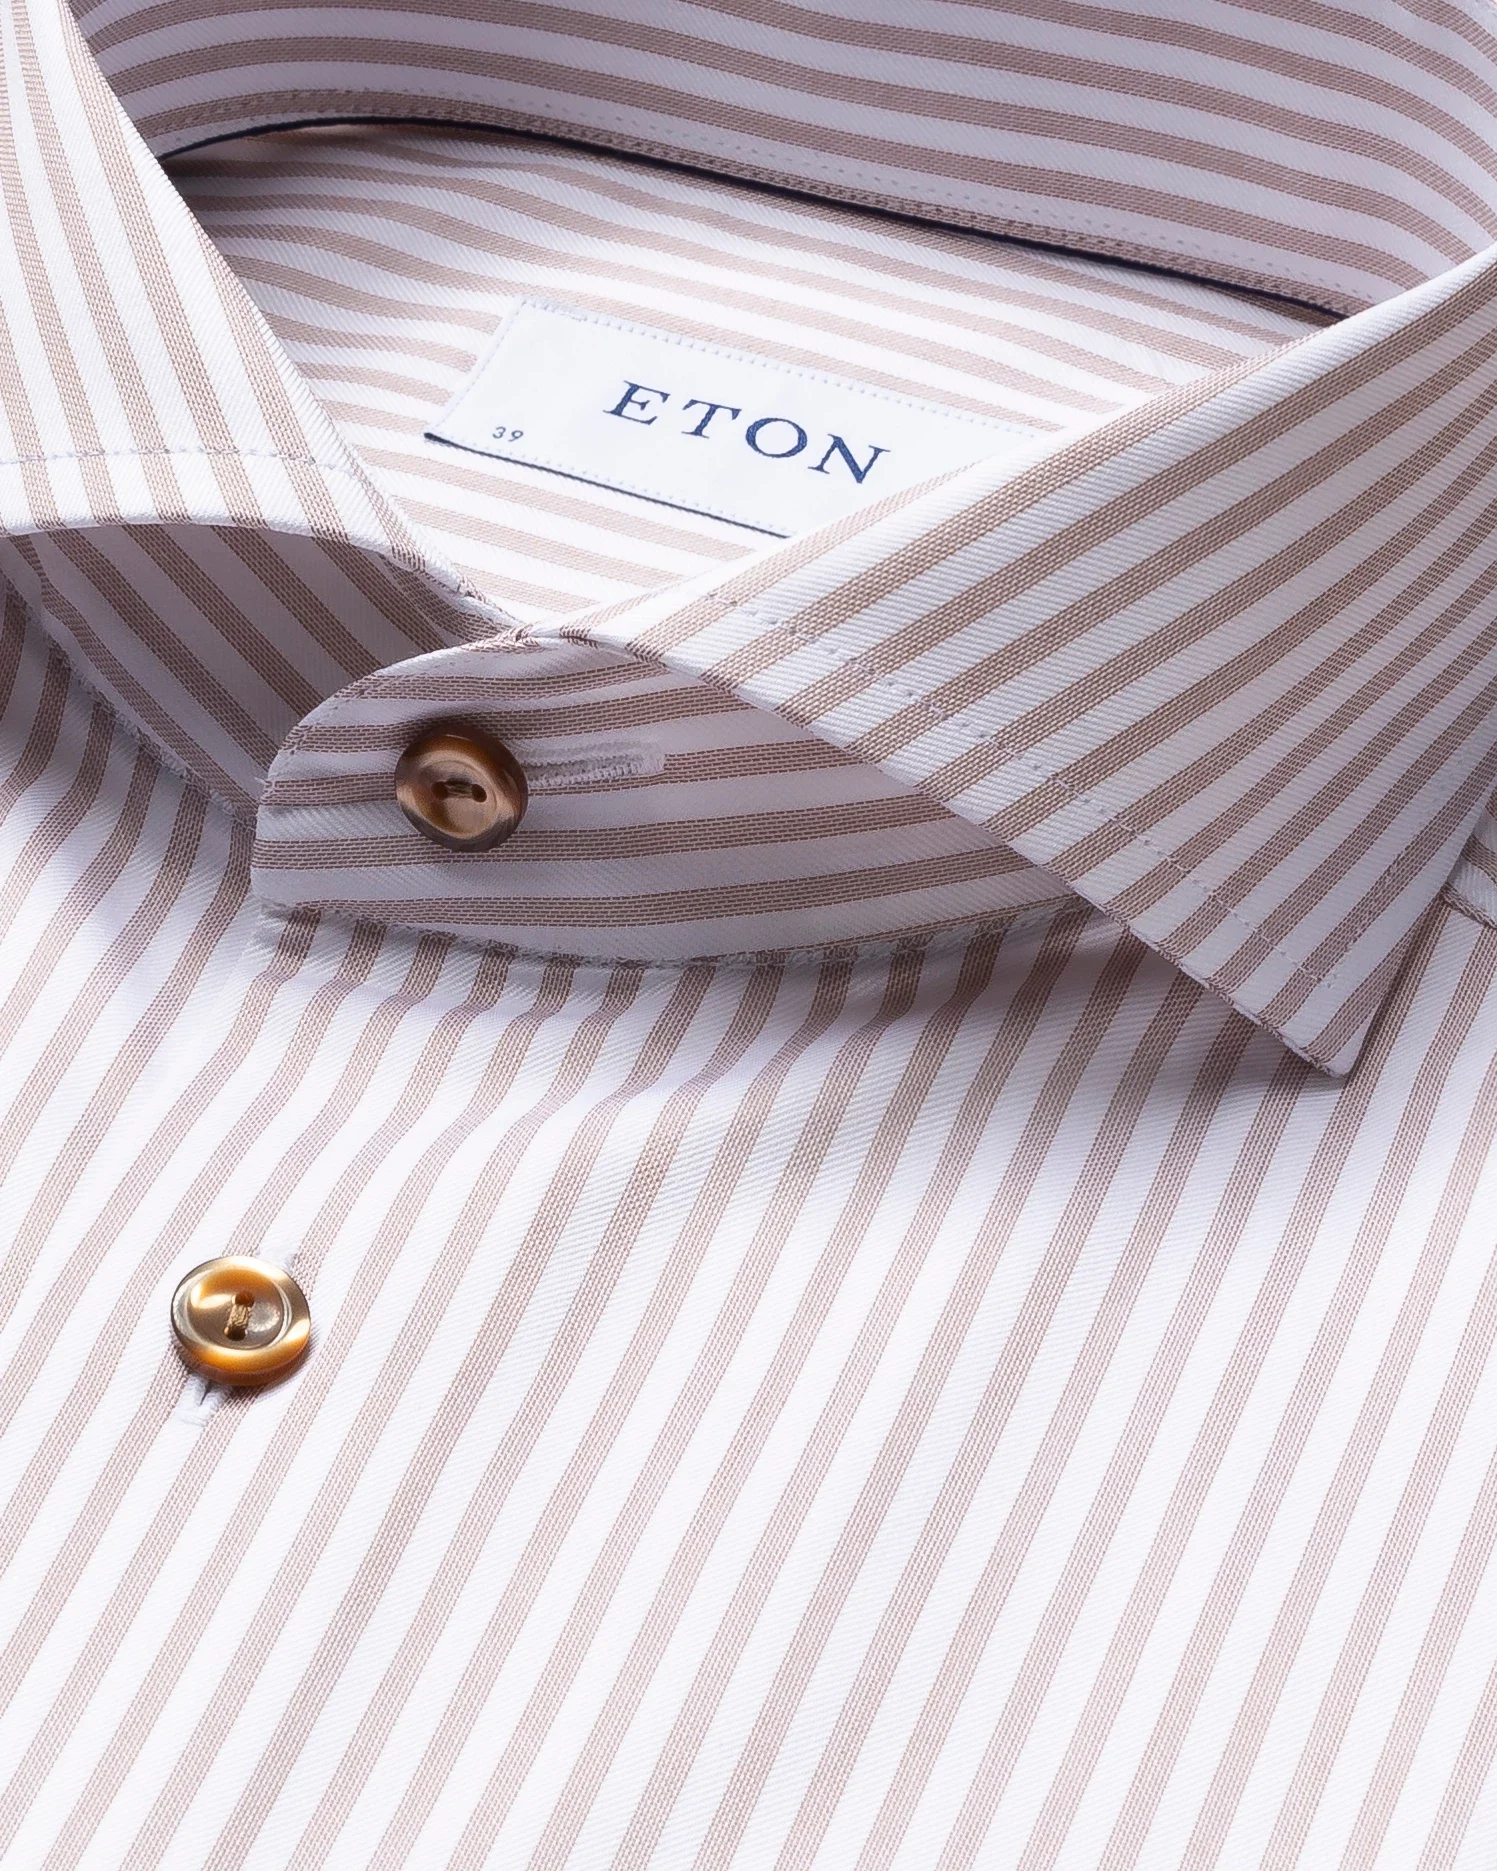 Eton - light brown striped signature twill shirt extreme cut away